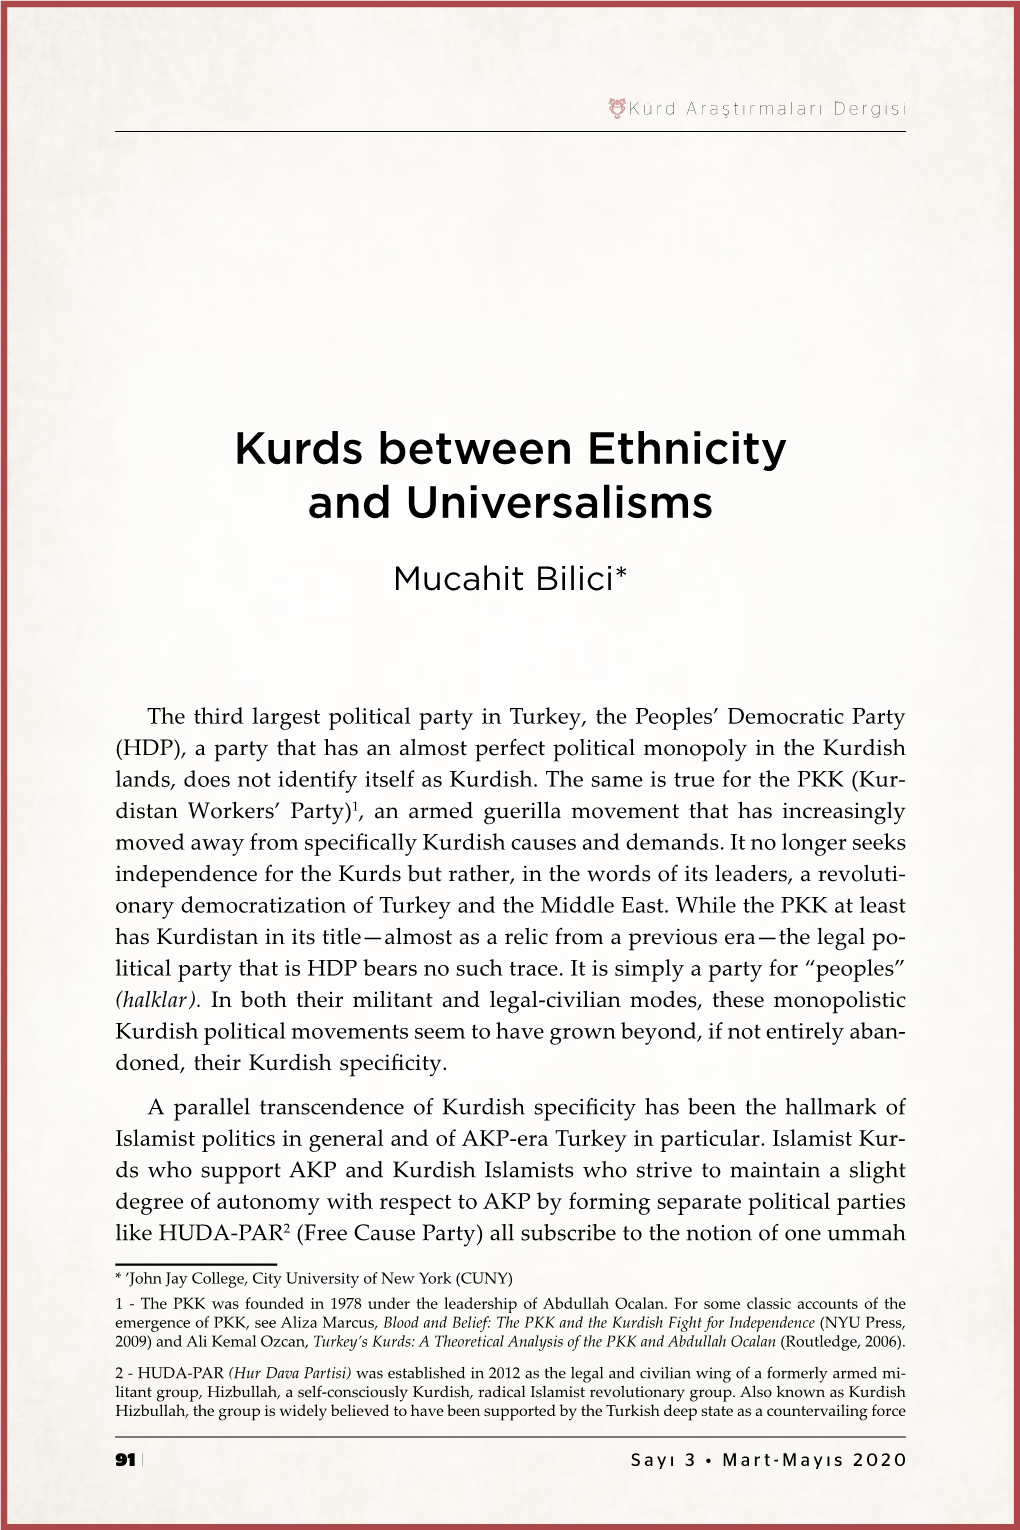 Kurds Between Ethnicity and Universalisms